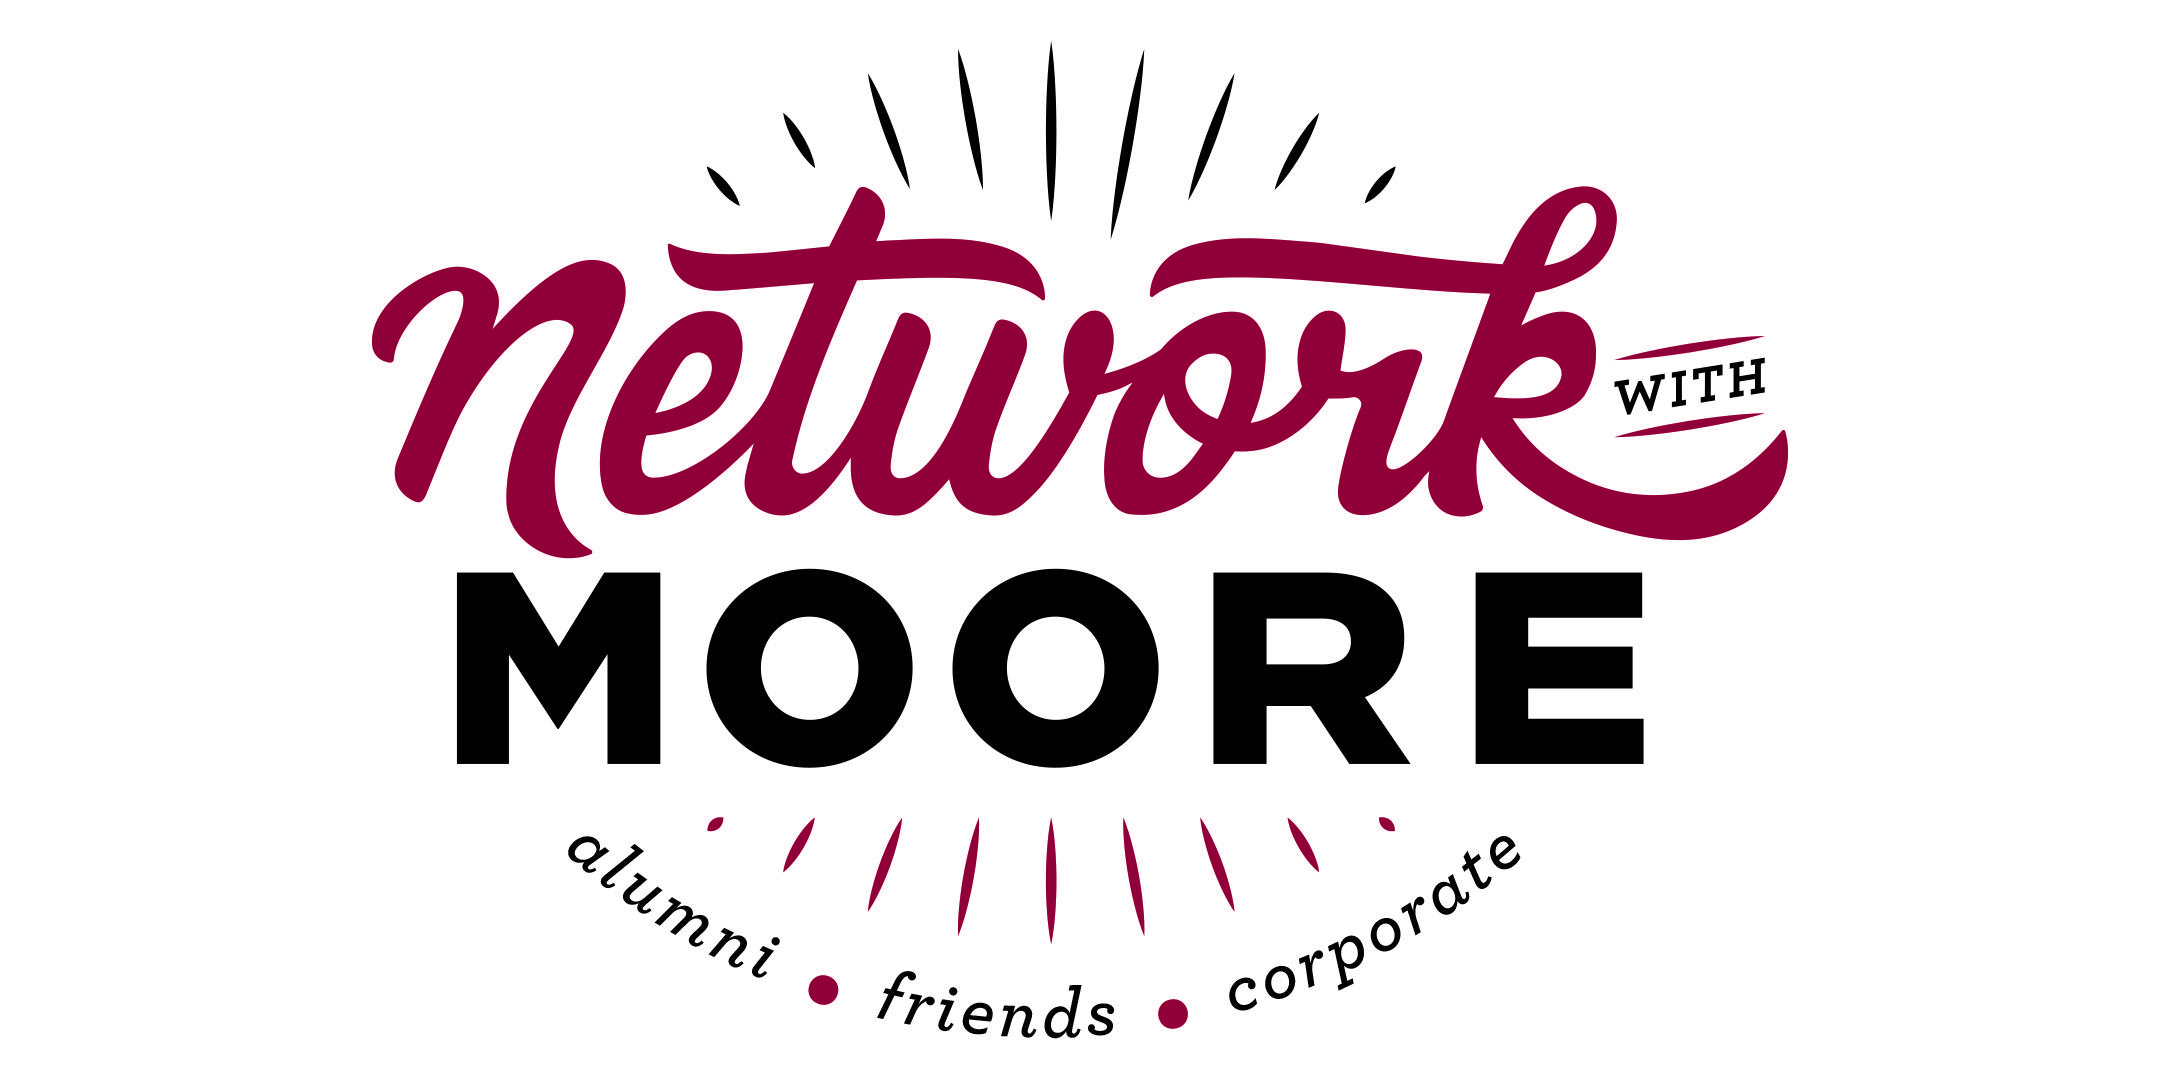 Atlanta: Network with Moore